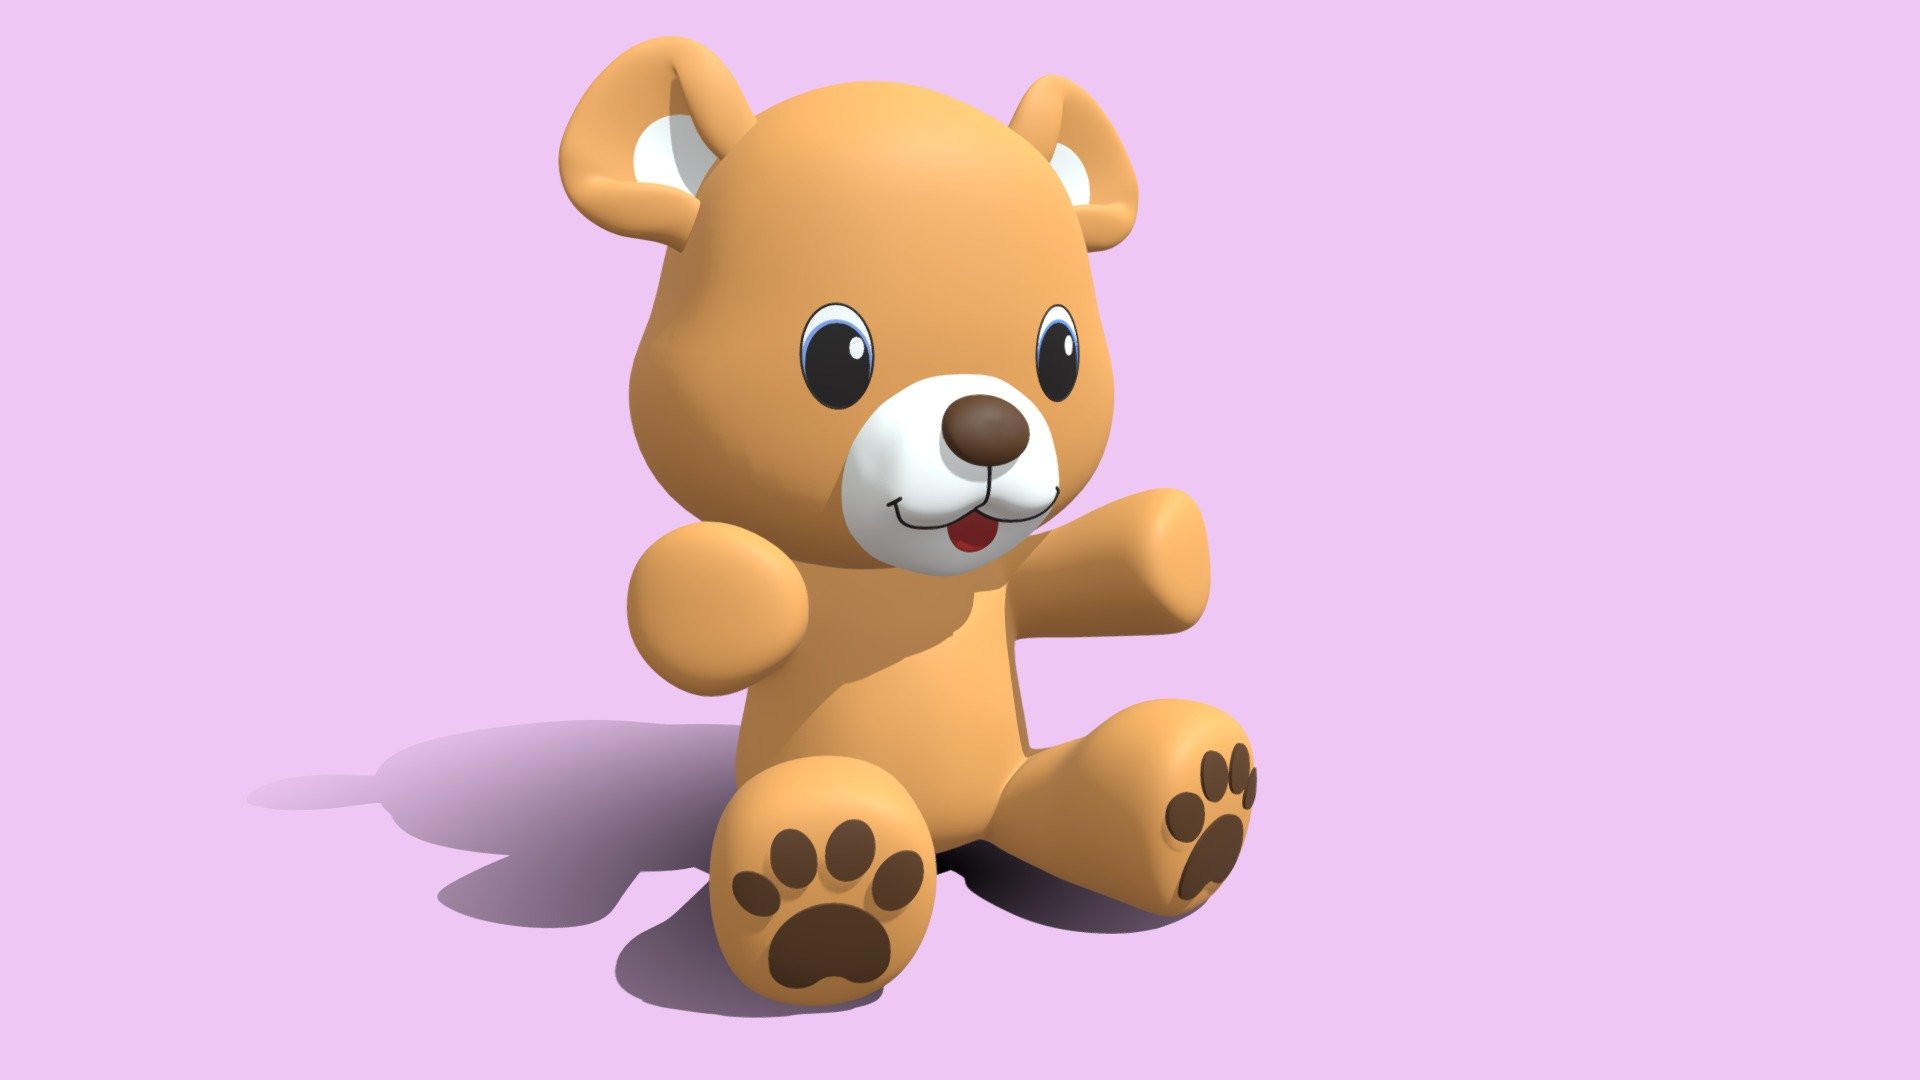 make in solidwork - TEDDY  BEAR - Download Free 3D model by liebherr996litronic 3d model